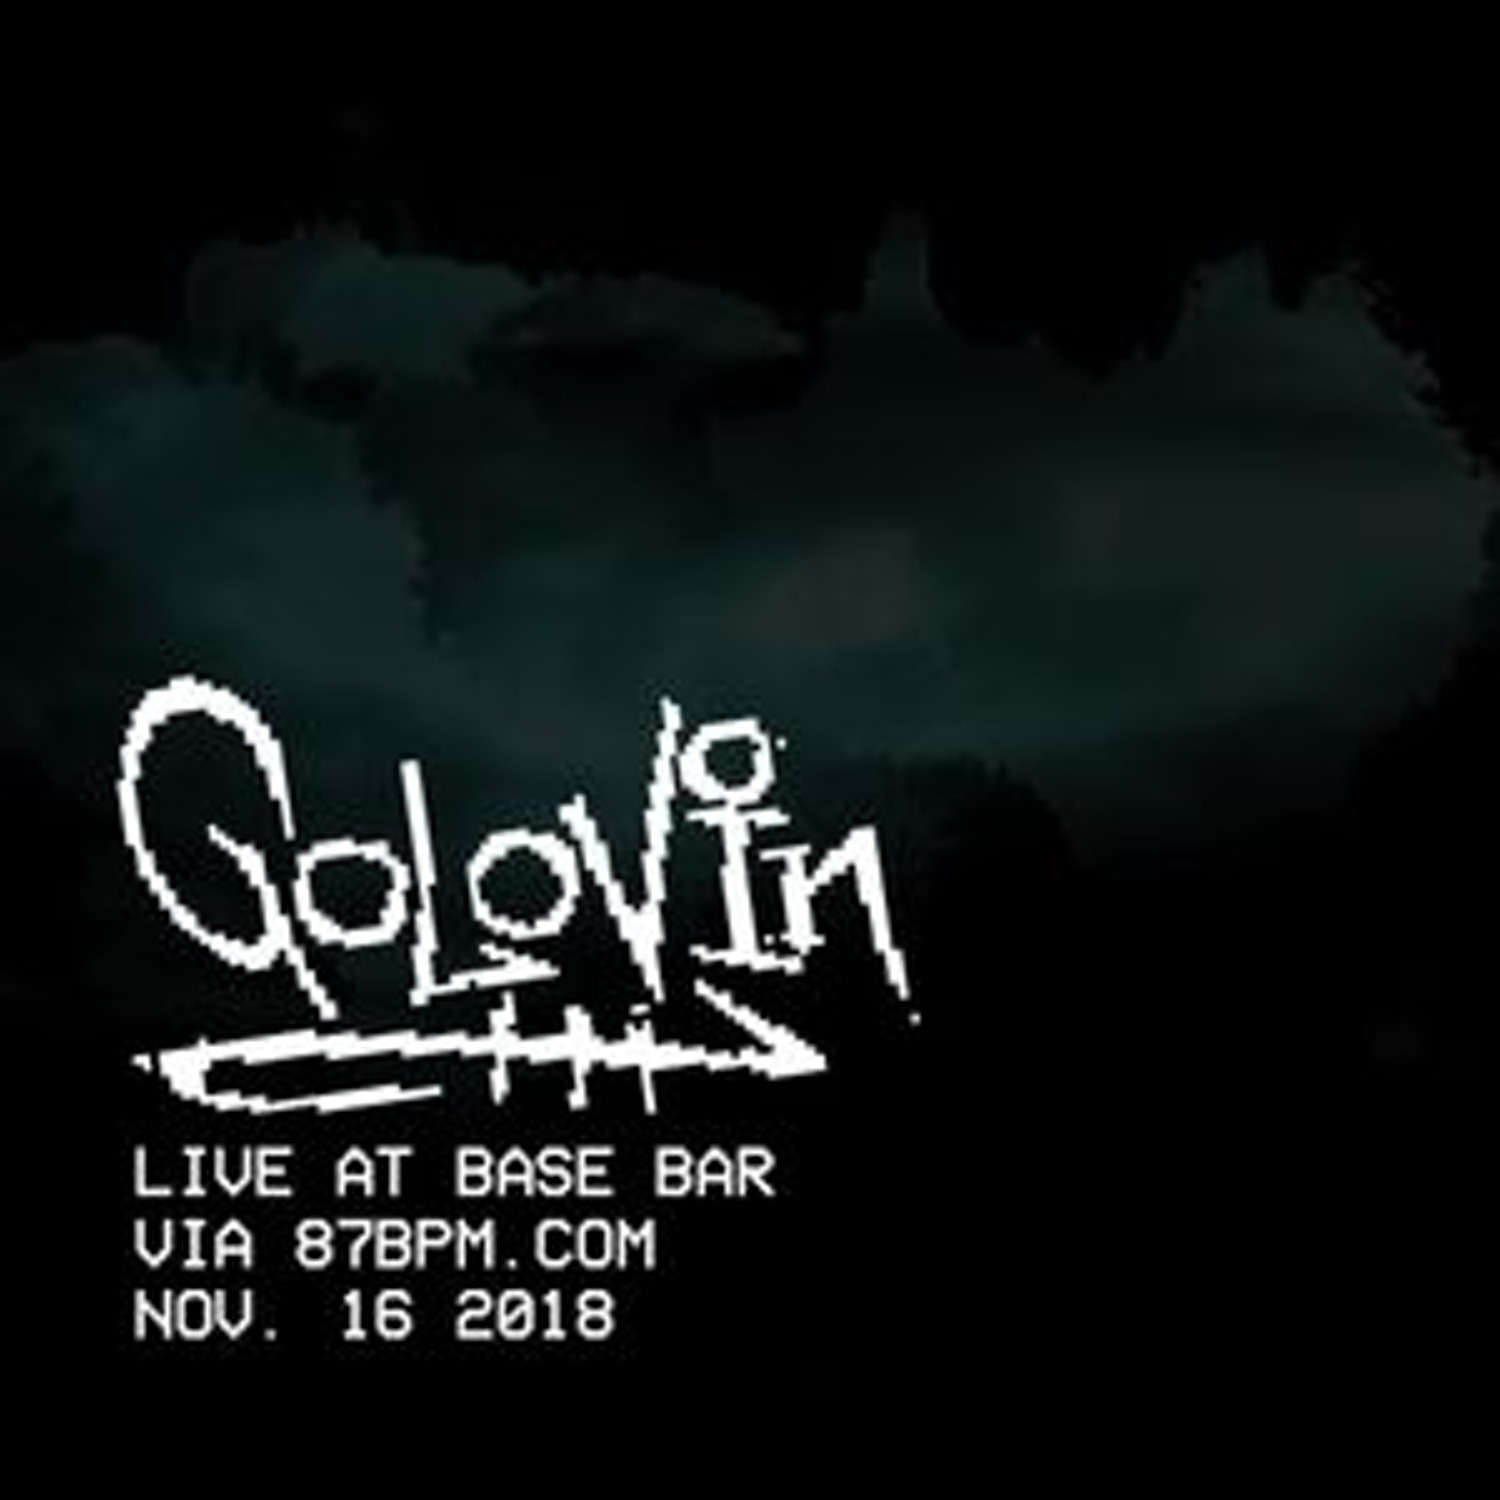 Golovin - Live Base Bar Via @87bpm.com (drum'n'bass, liquid funk, mixed 2018)